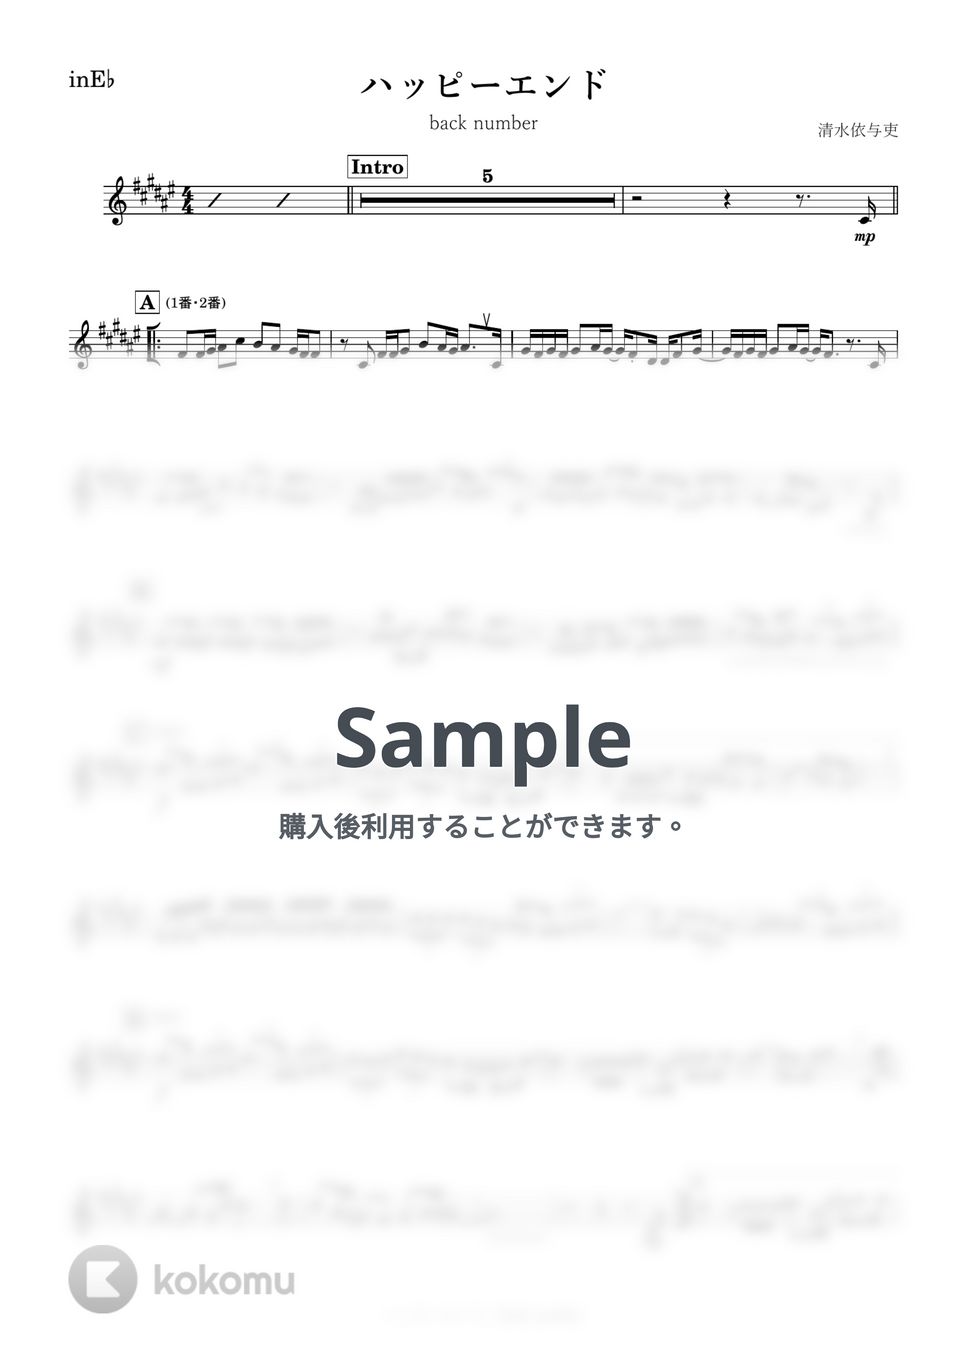 back number - ハッピーエンド (E♭) by kanamusic